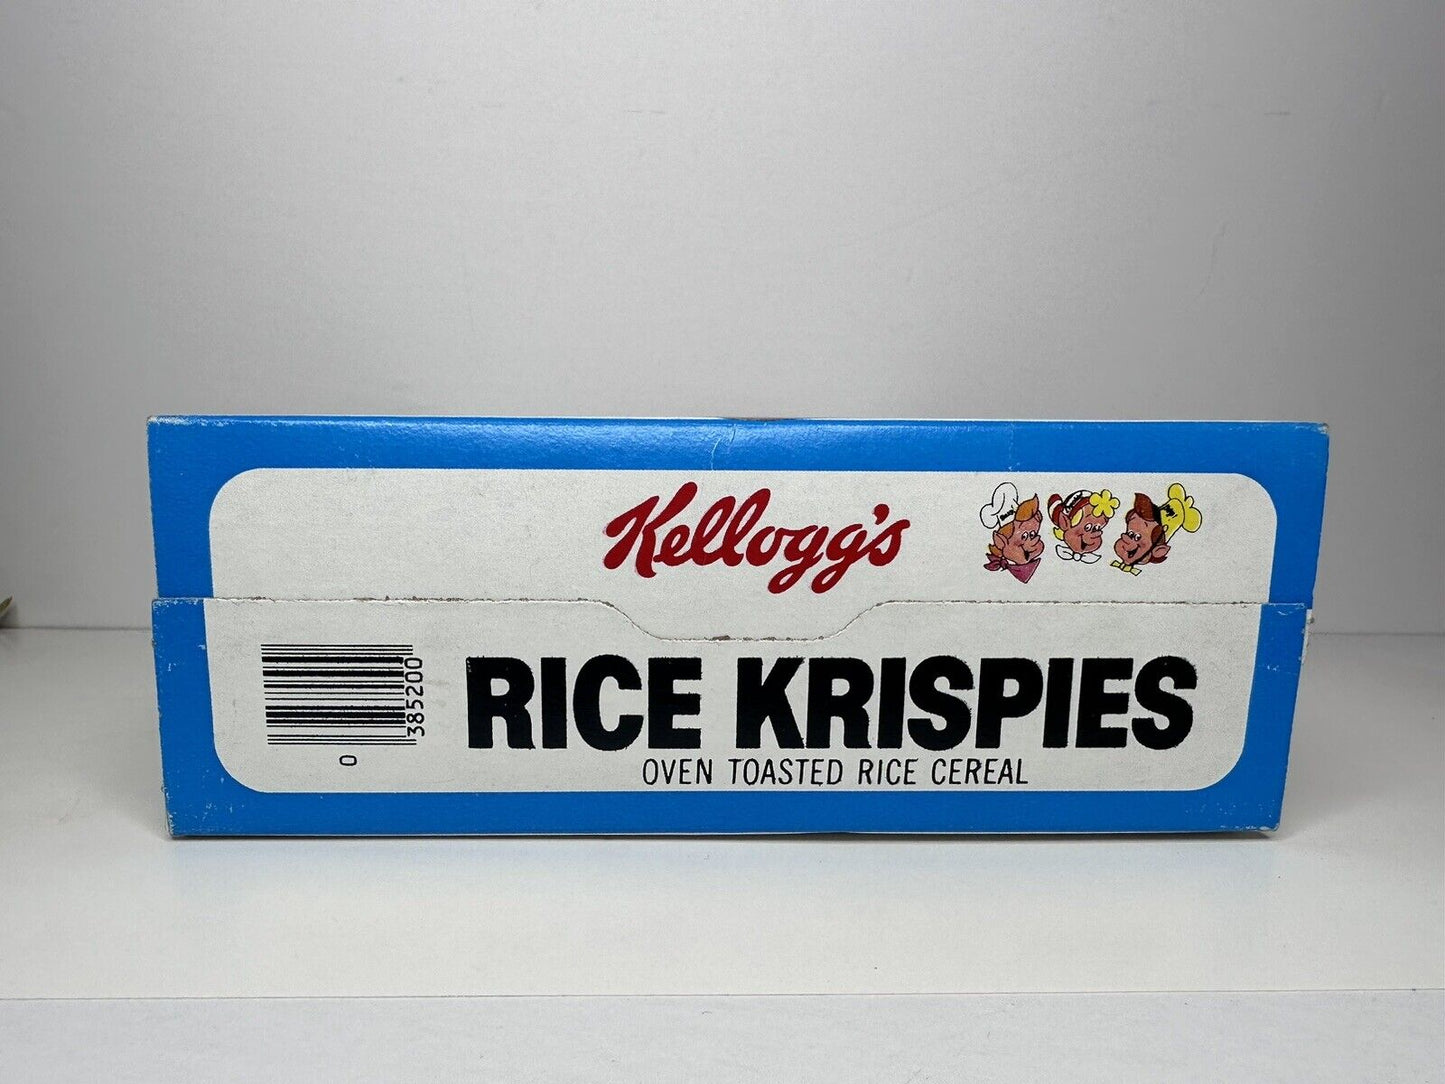 Vintage 1981 Kellogg's Rice Krispies 75th Anniversary Collectible Empty Cereal Box with Original Bag - Rare Retro Breakfast Memorabilia - TreasuTiques